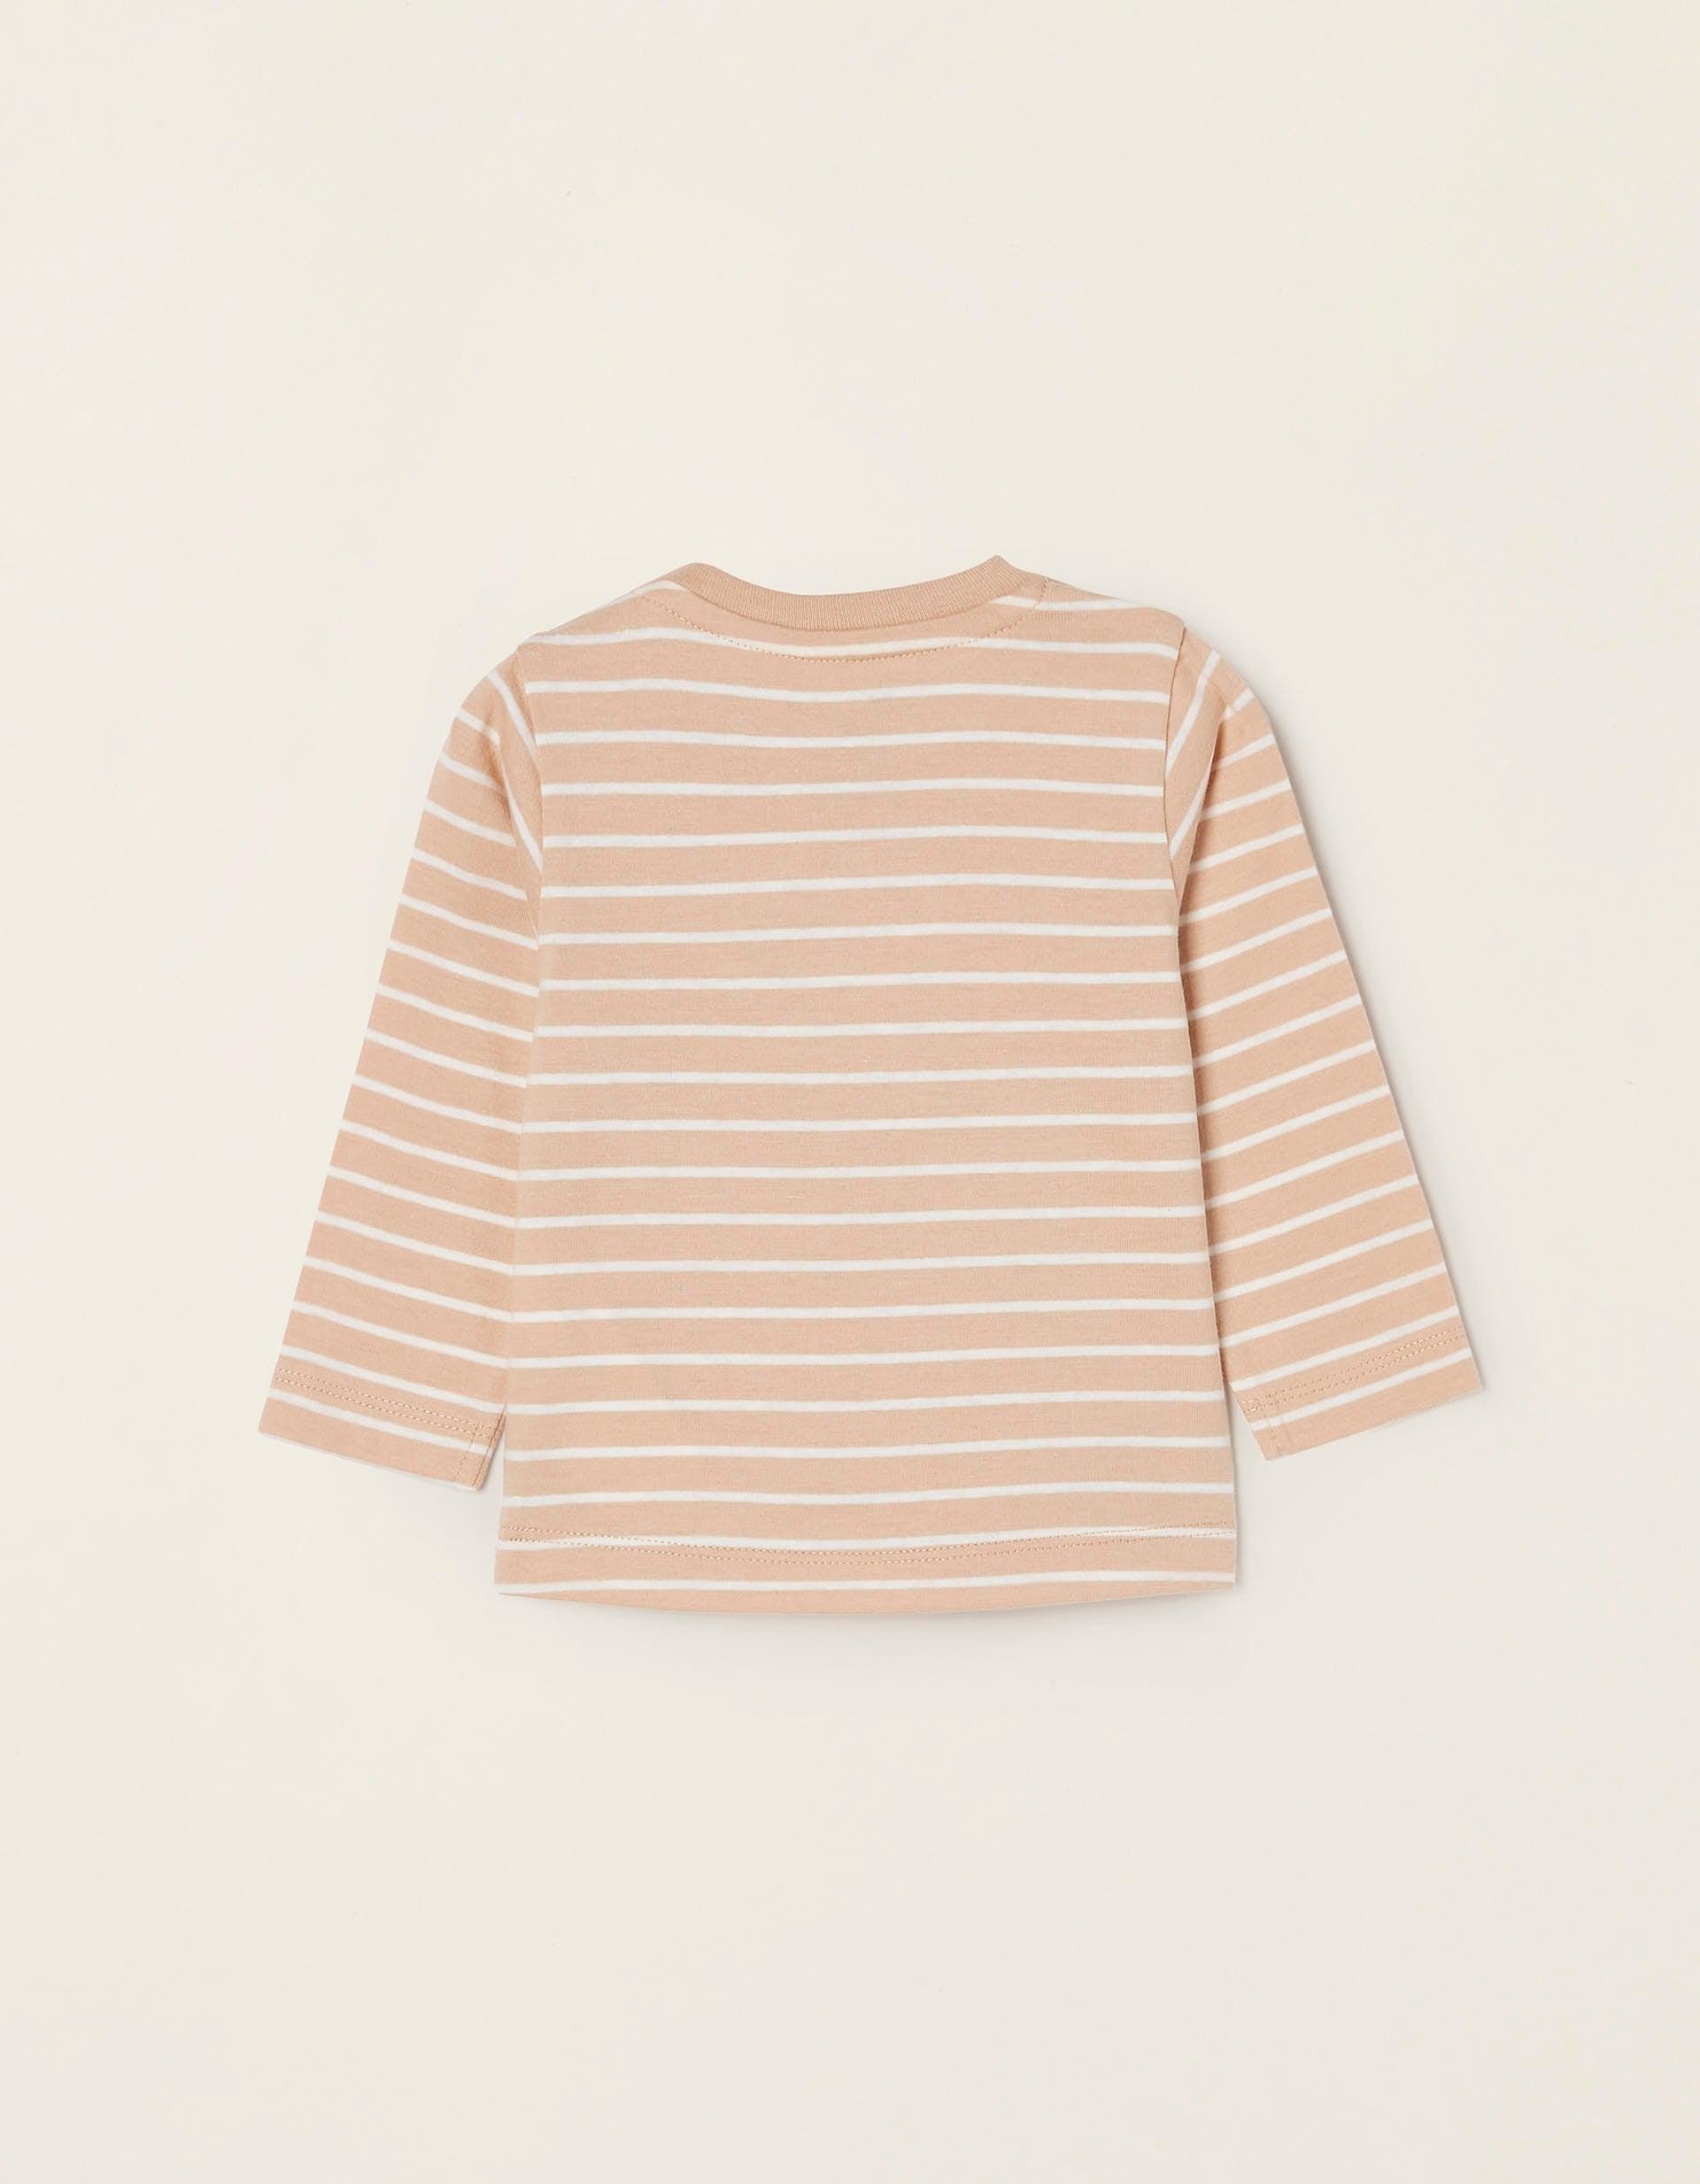 Zippy - Beige Long-Sleeve Cotton T-Shirt, Baby Boys